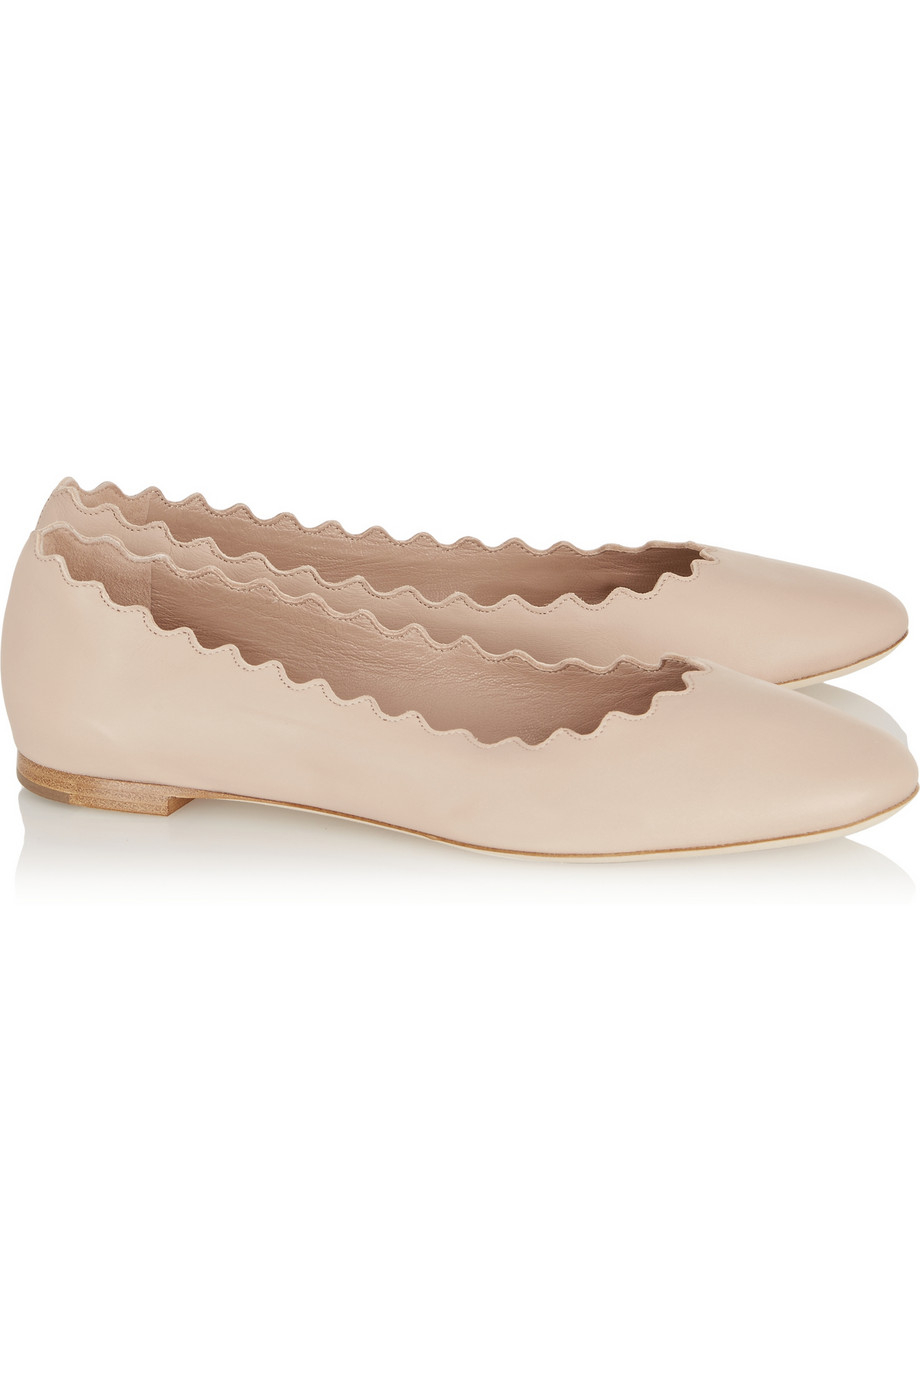 Chloé Lauren Leather Ballet Flats in Pink - Lyst